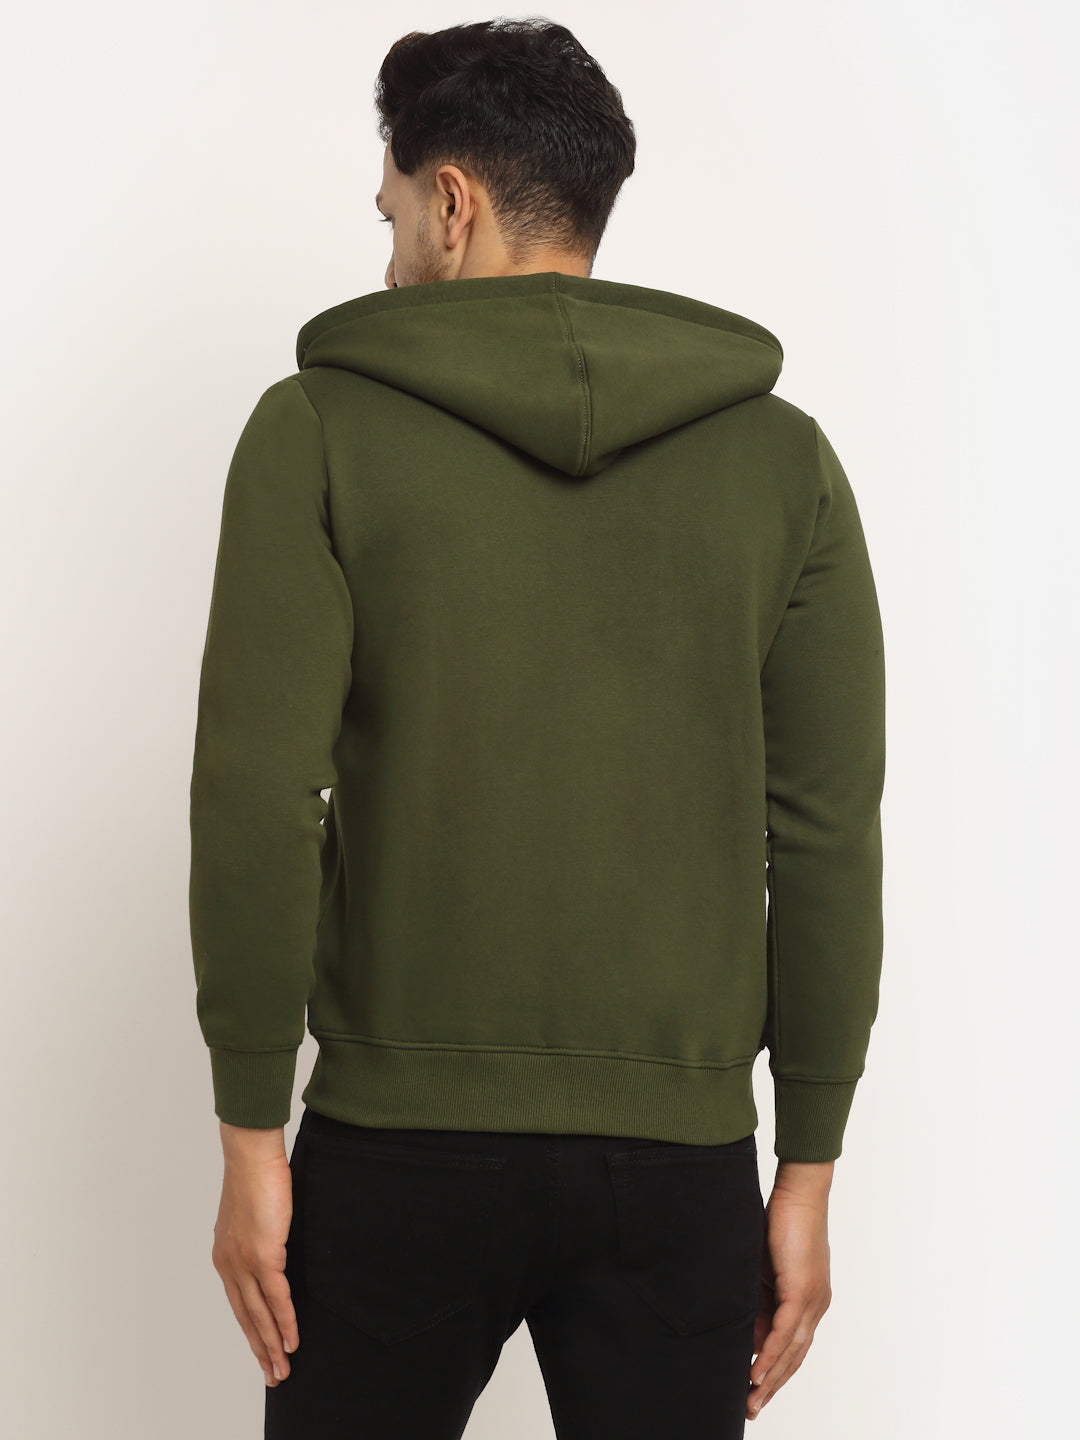 Men Olive Green Hood Hosiery Solid Sweatshirt